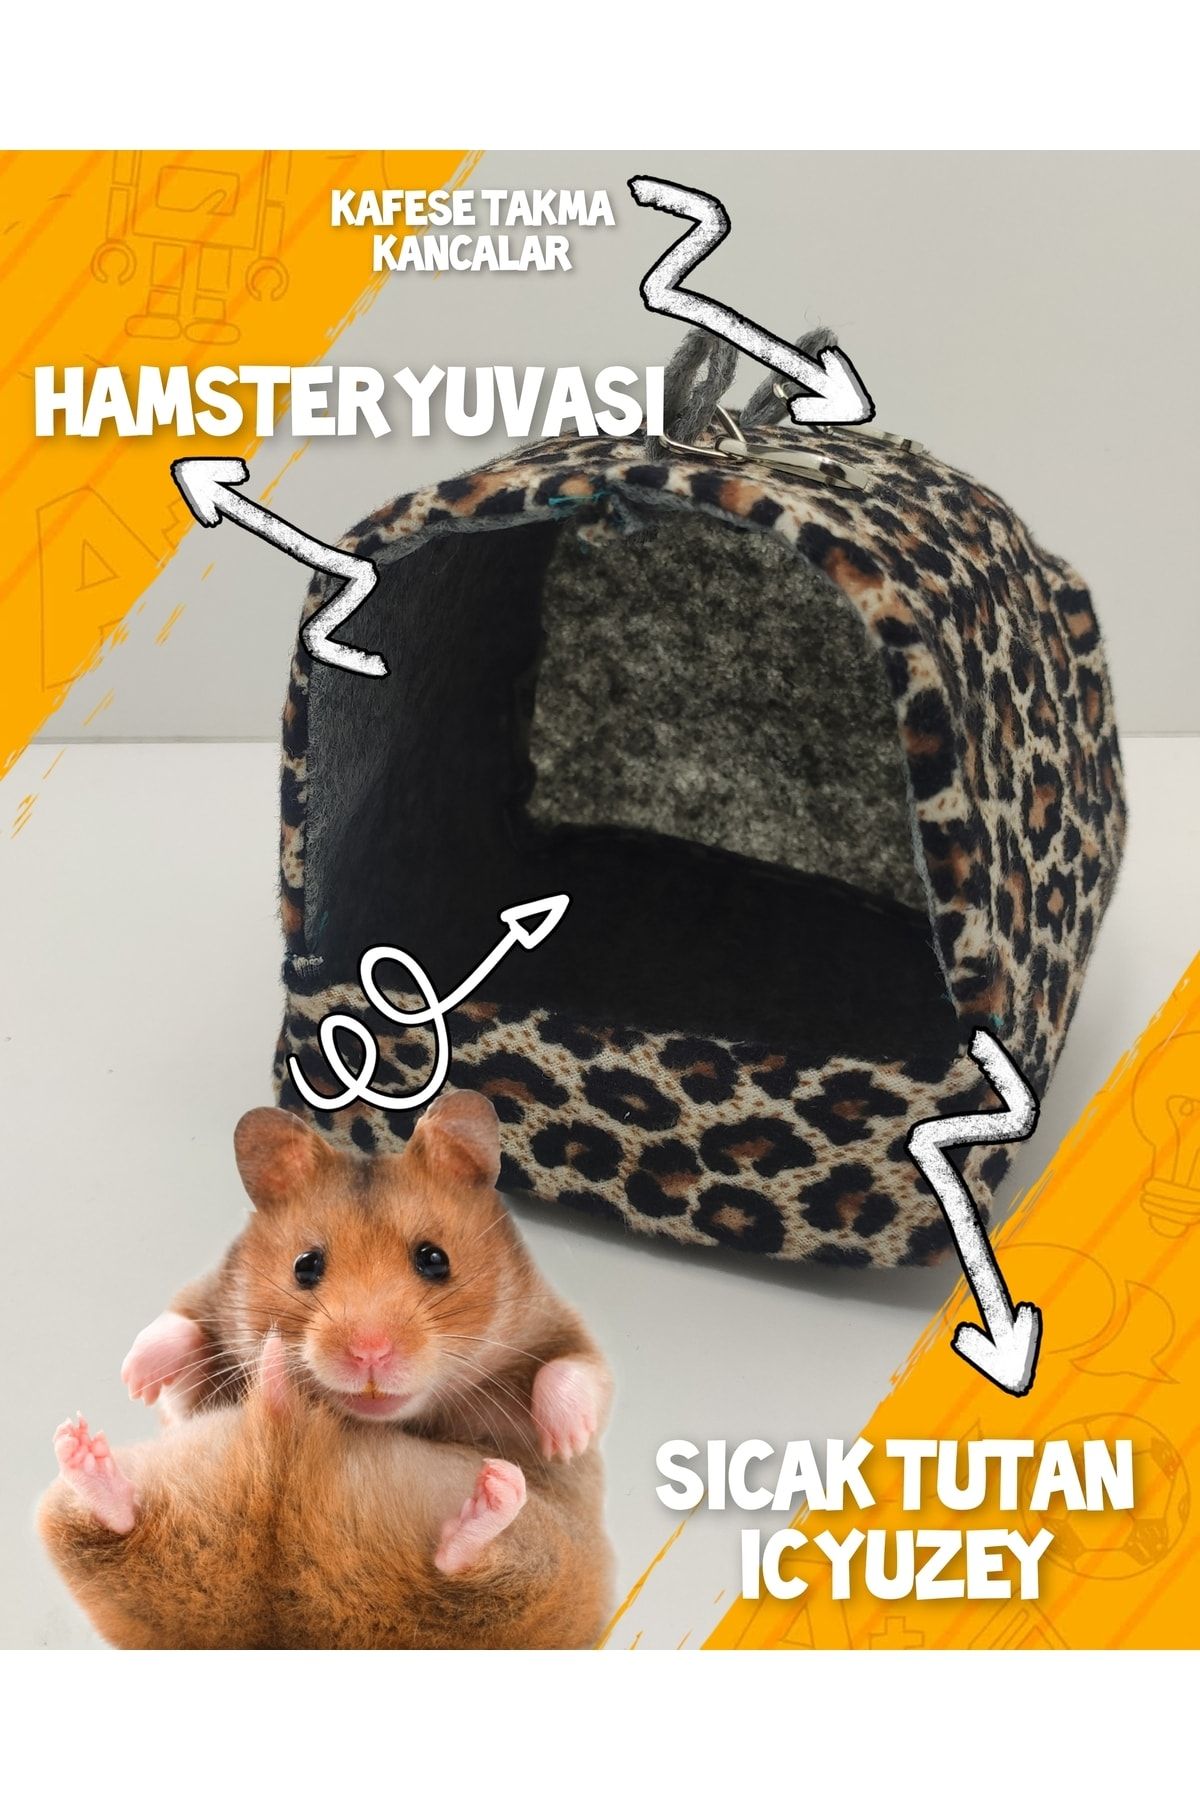 سایت hamster